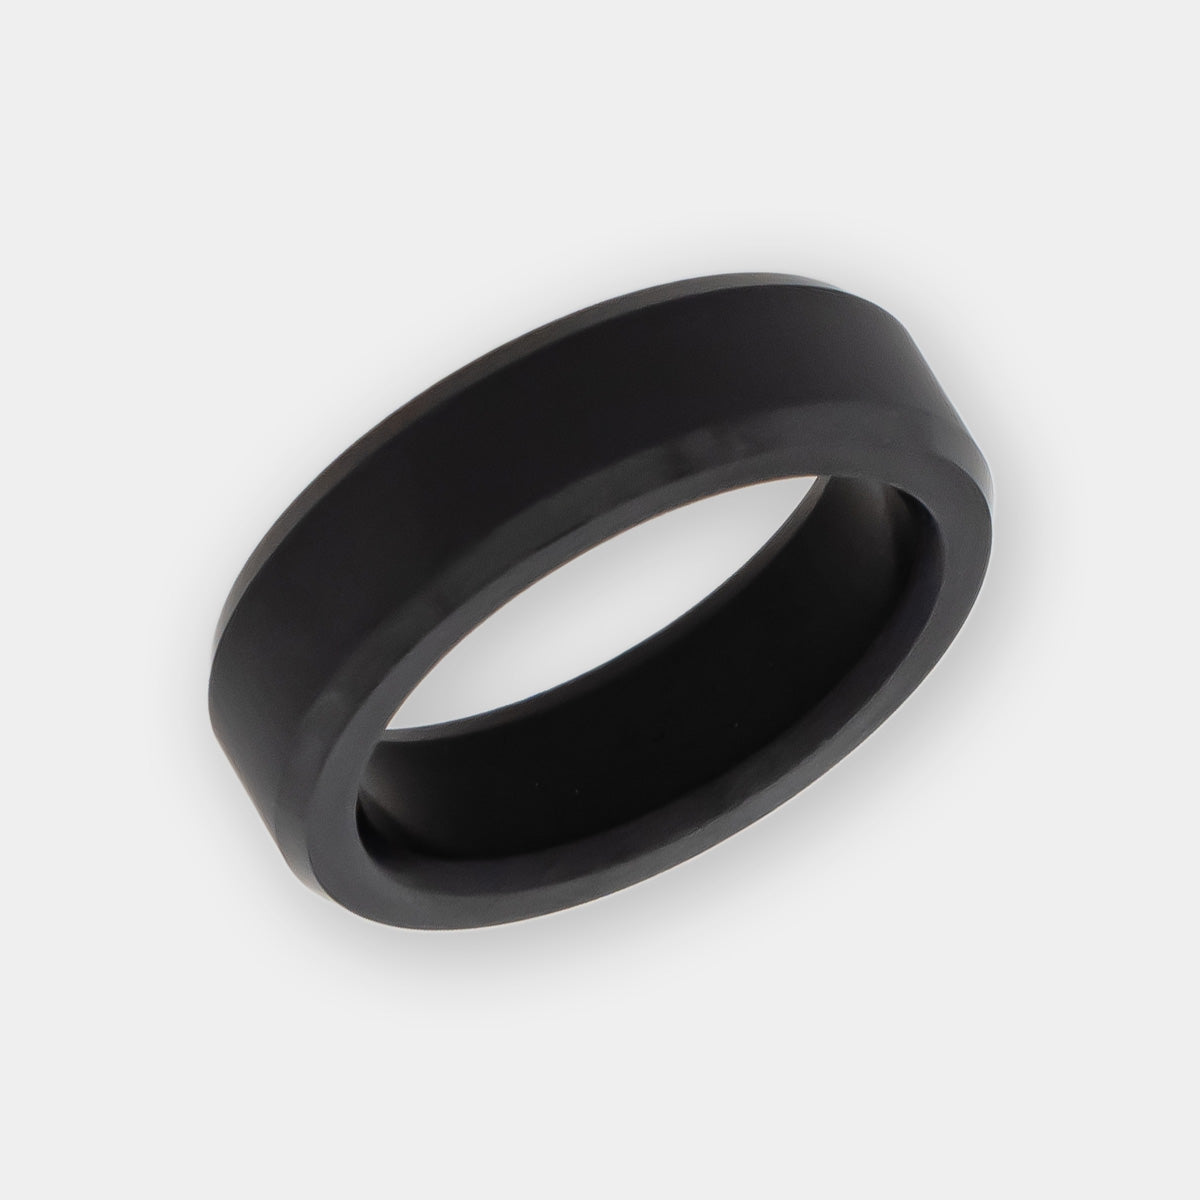 Solid Black Diamond Ring with Dome Shape on White Background | Elysium Black Diamond Ring - Ares 6mm | Men's Black Diamond Wedding Band | Products | Image 1